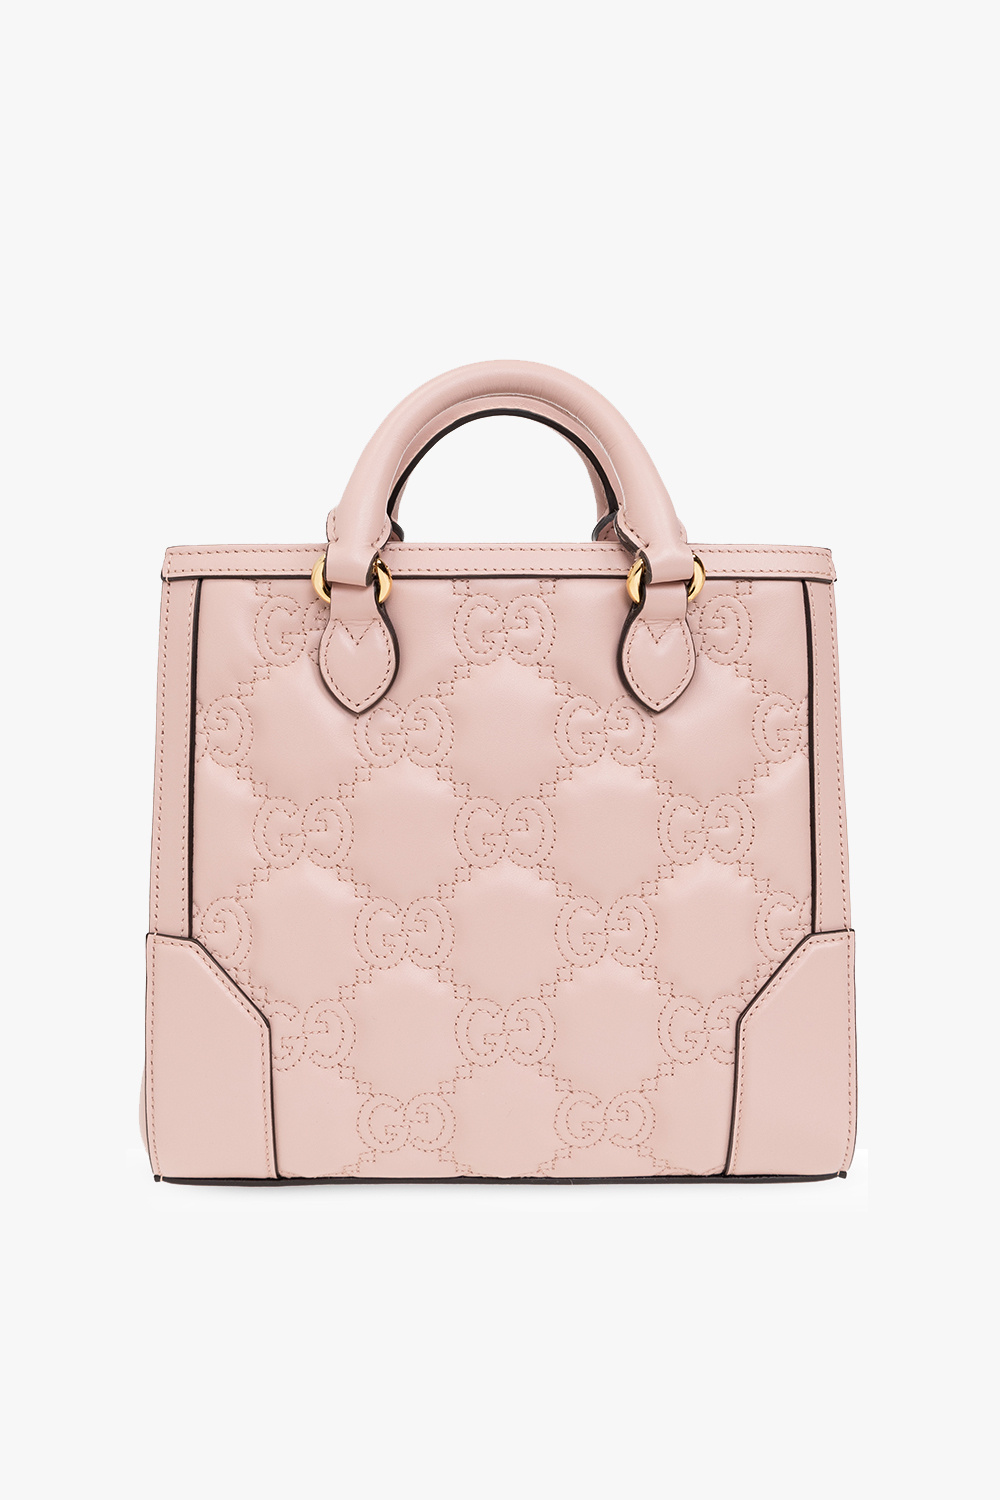 Gucci Black Bee Gold Star Padlock Italy Top Handle Small Leather Handbag  Bag New